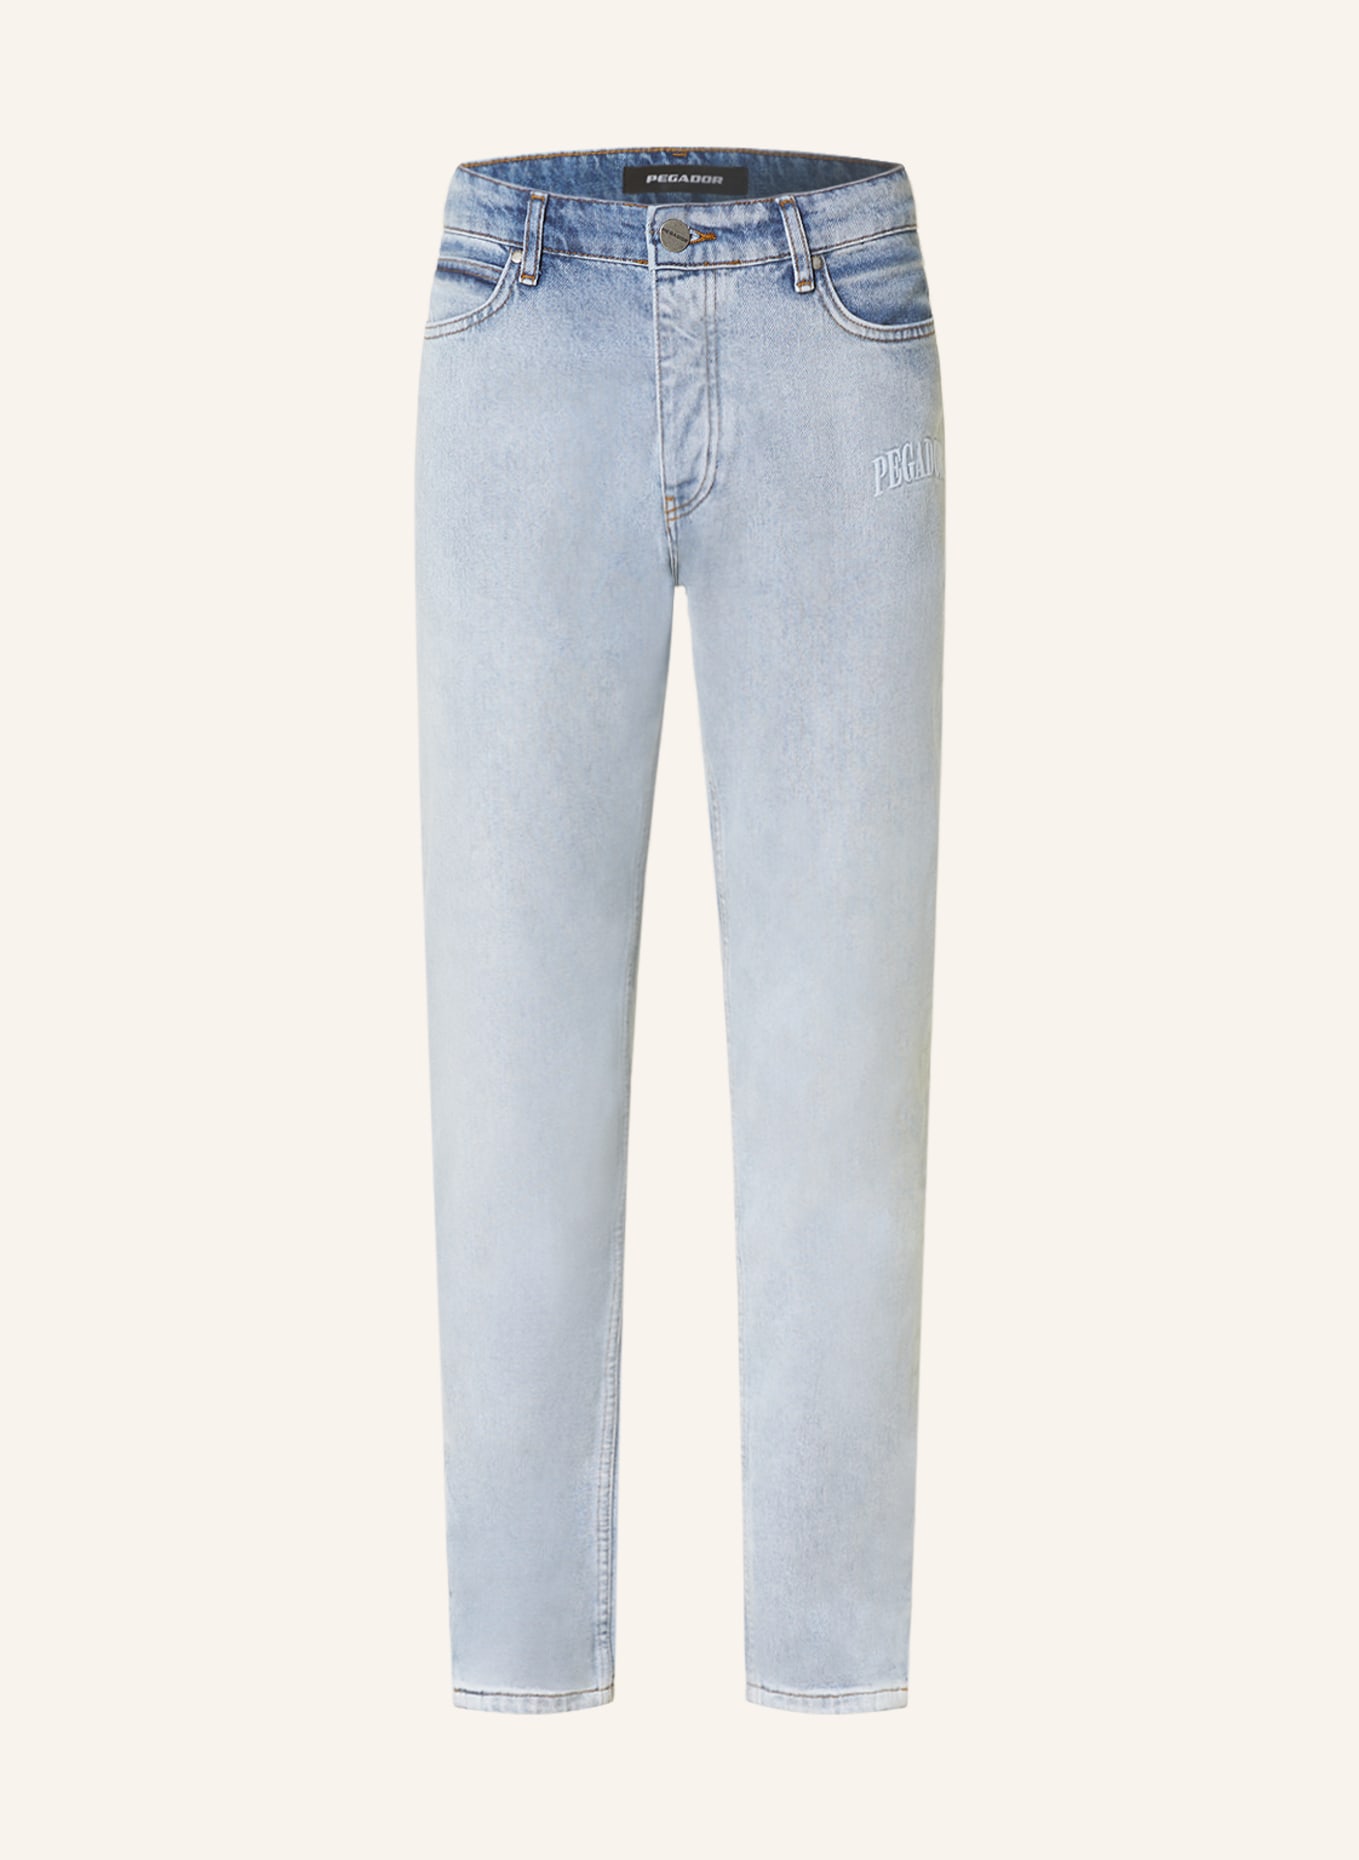 PEGADOR Jeans CARPE Extra Slim Fit, Farbe: 076 washed light blue (Bild 1)